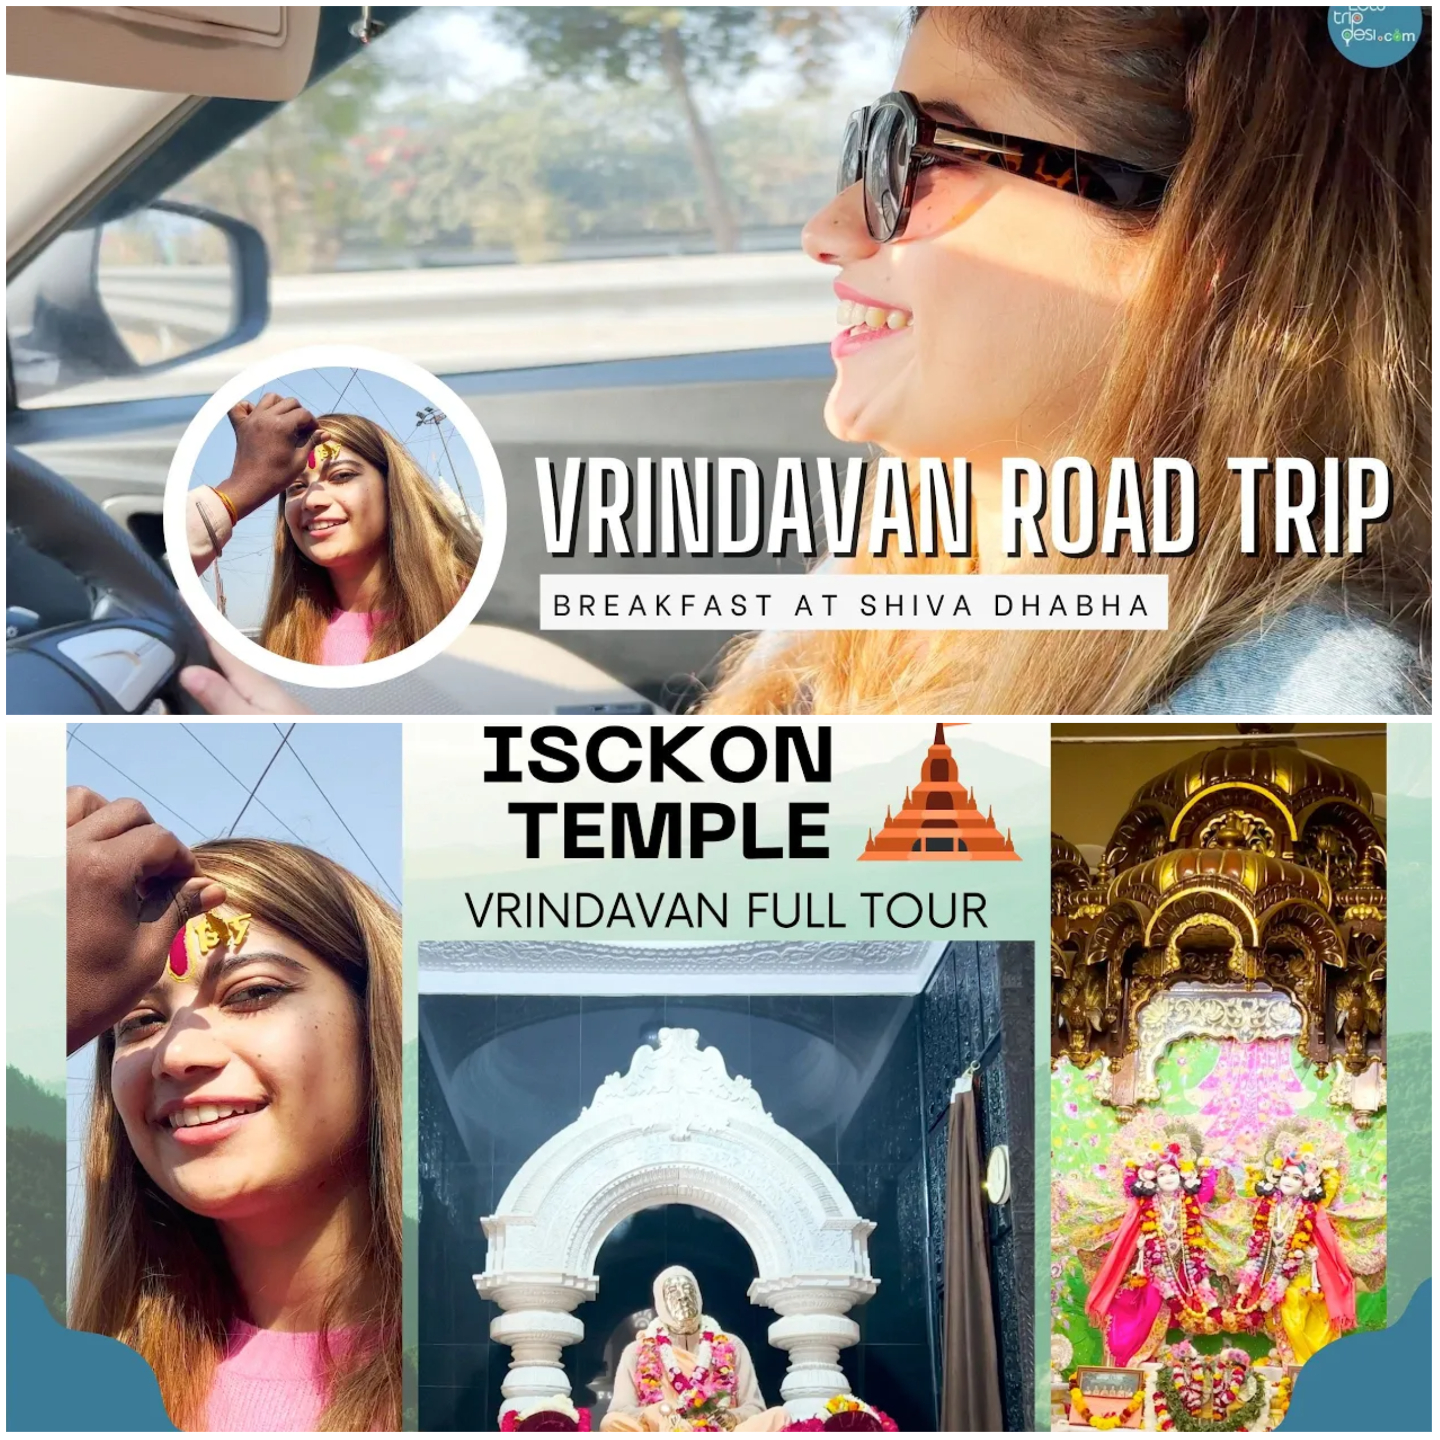 Solo trip to Vrindavan